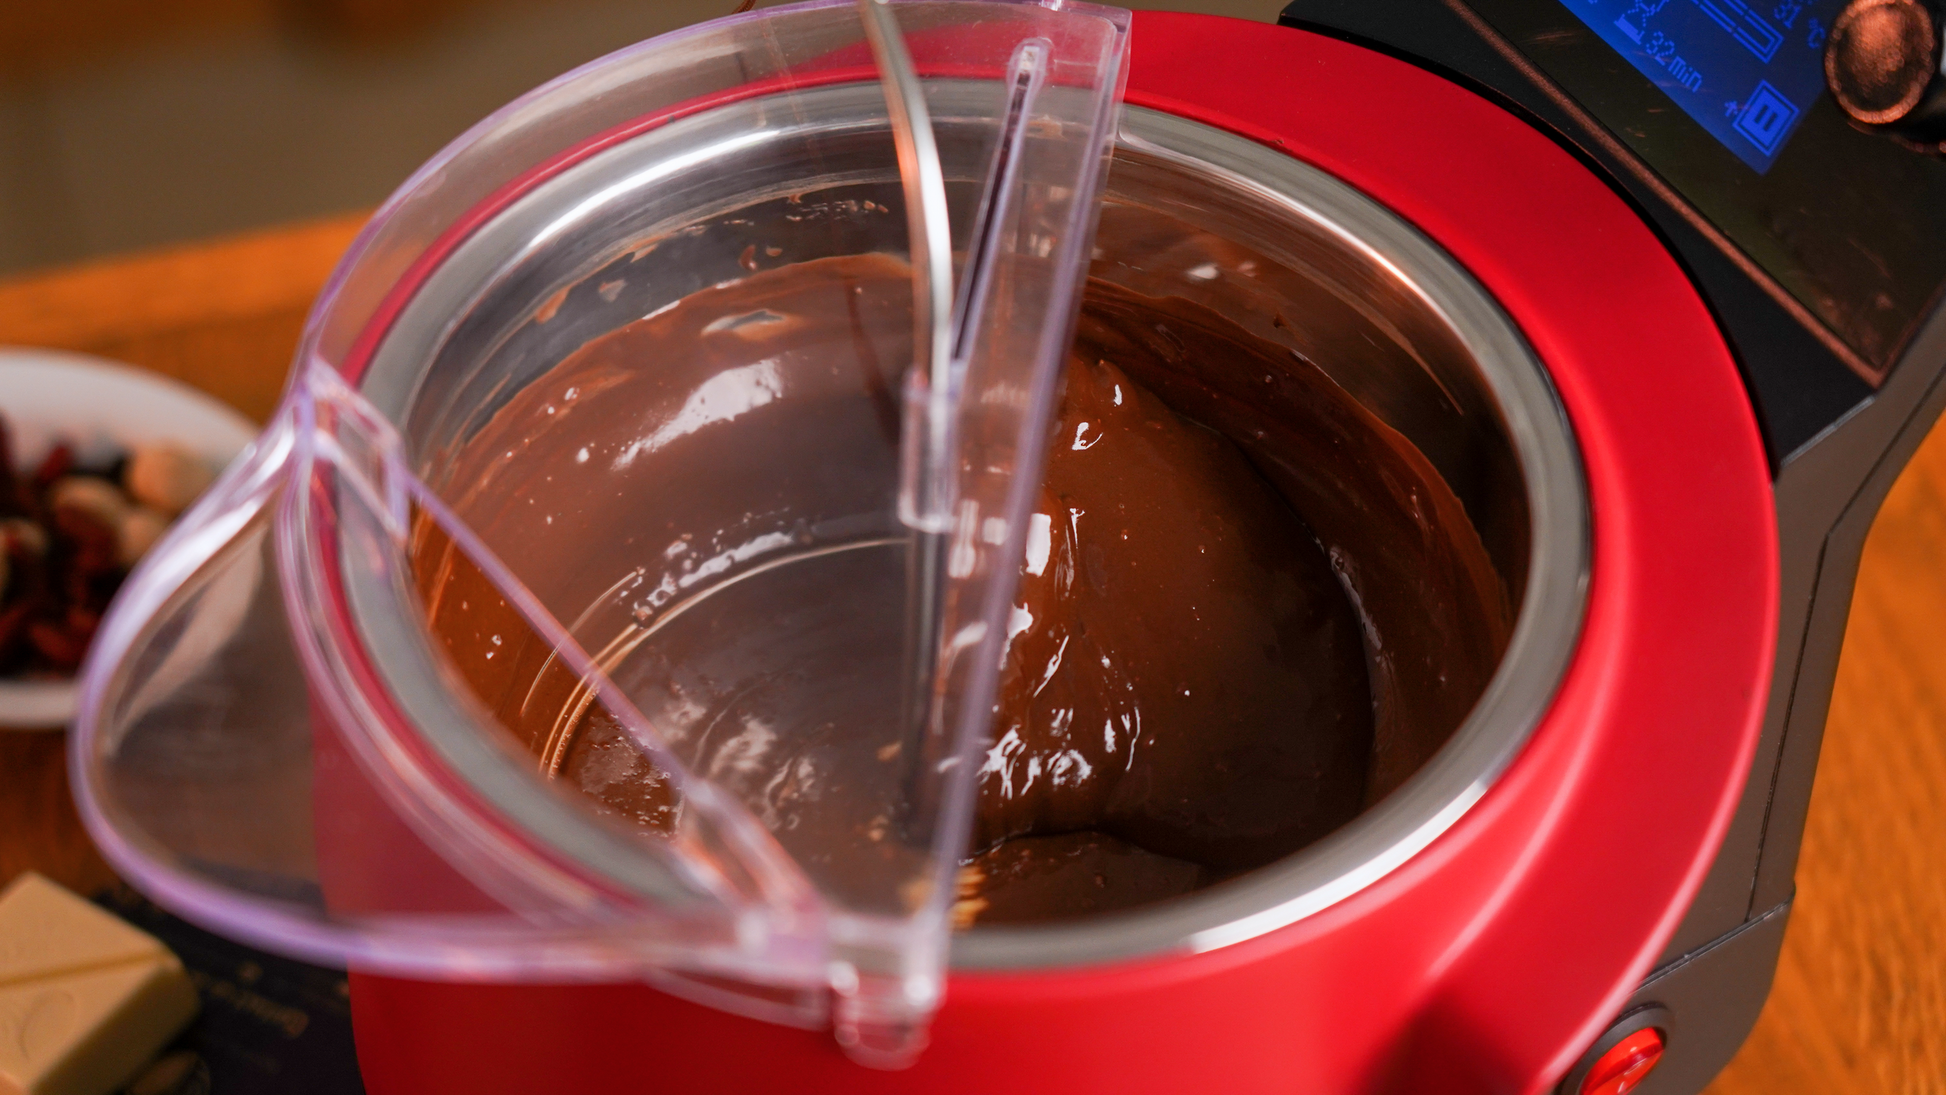 DIY Chocolate Starter Kit – homechocolat